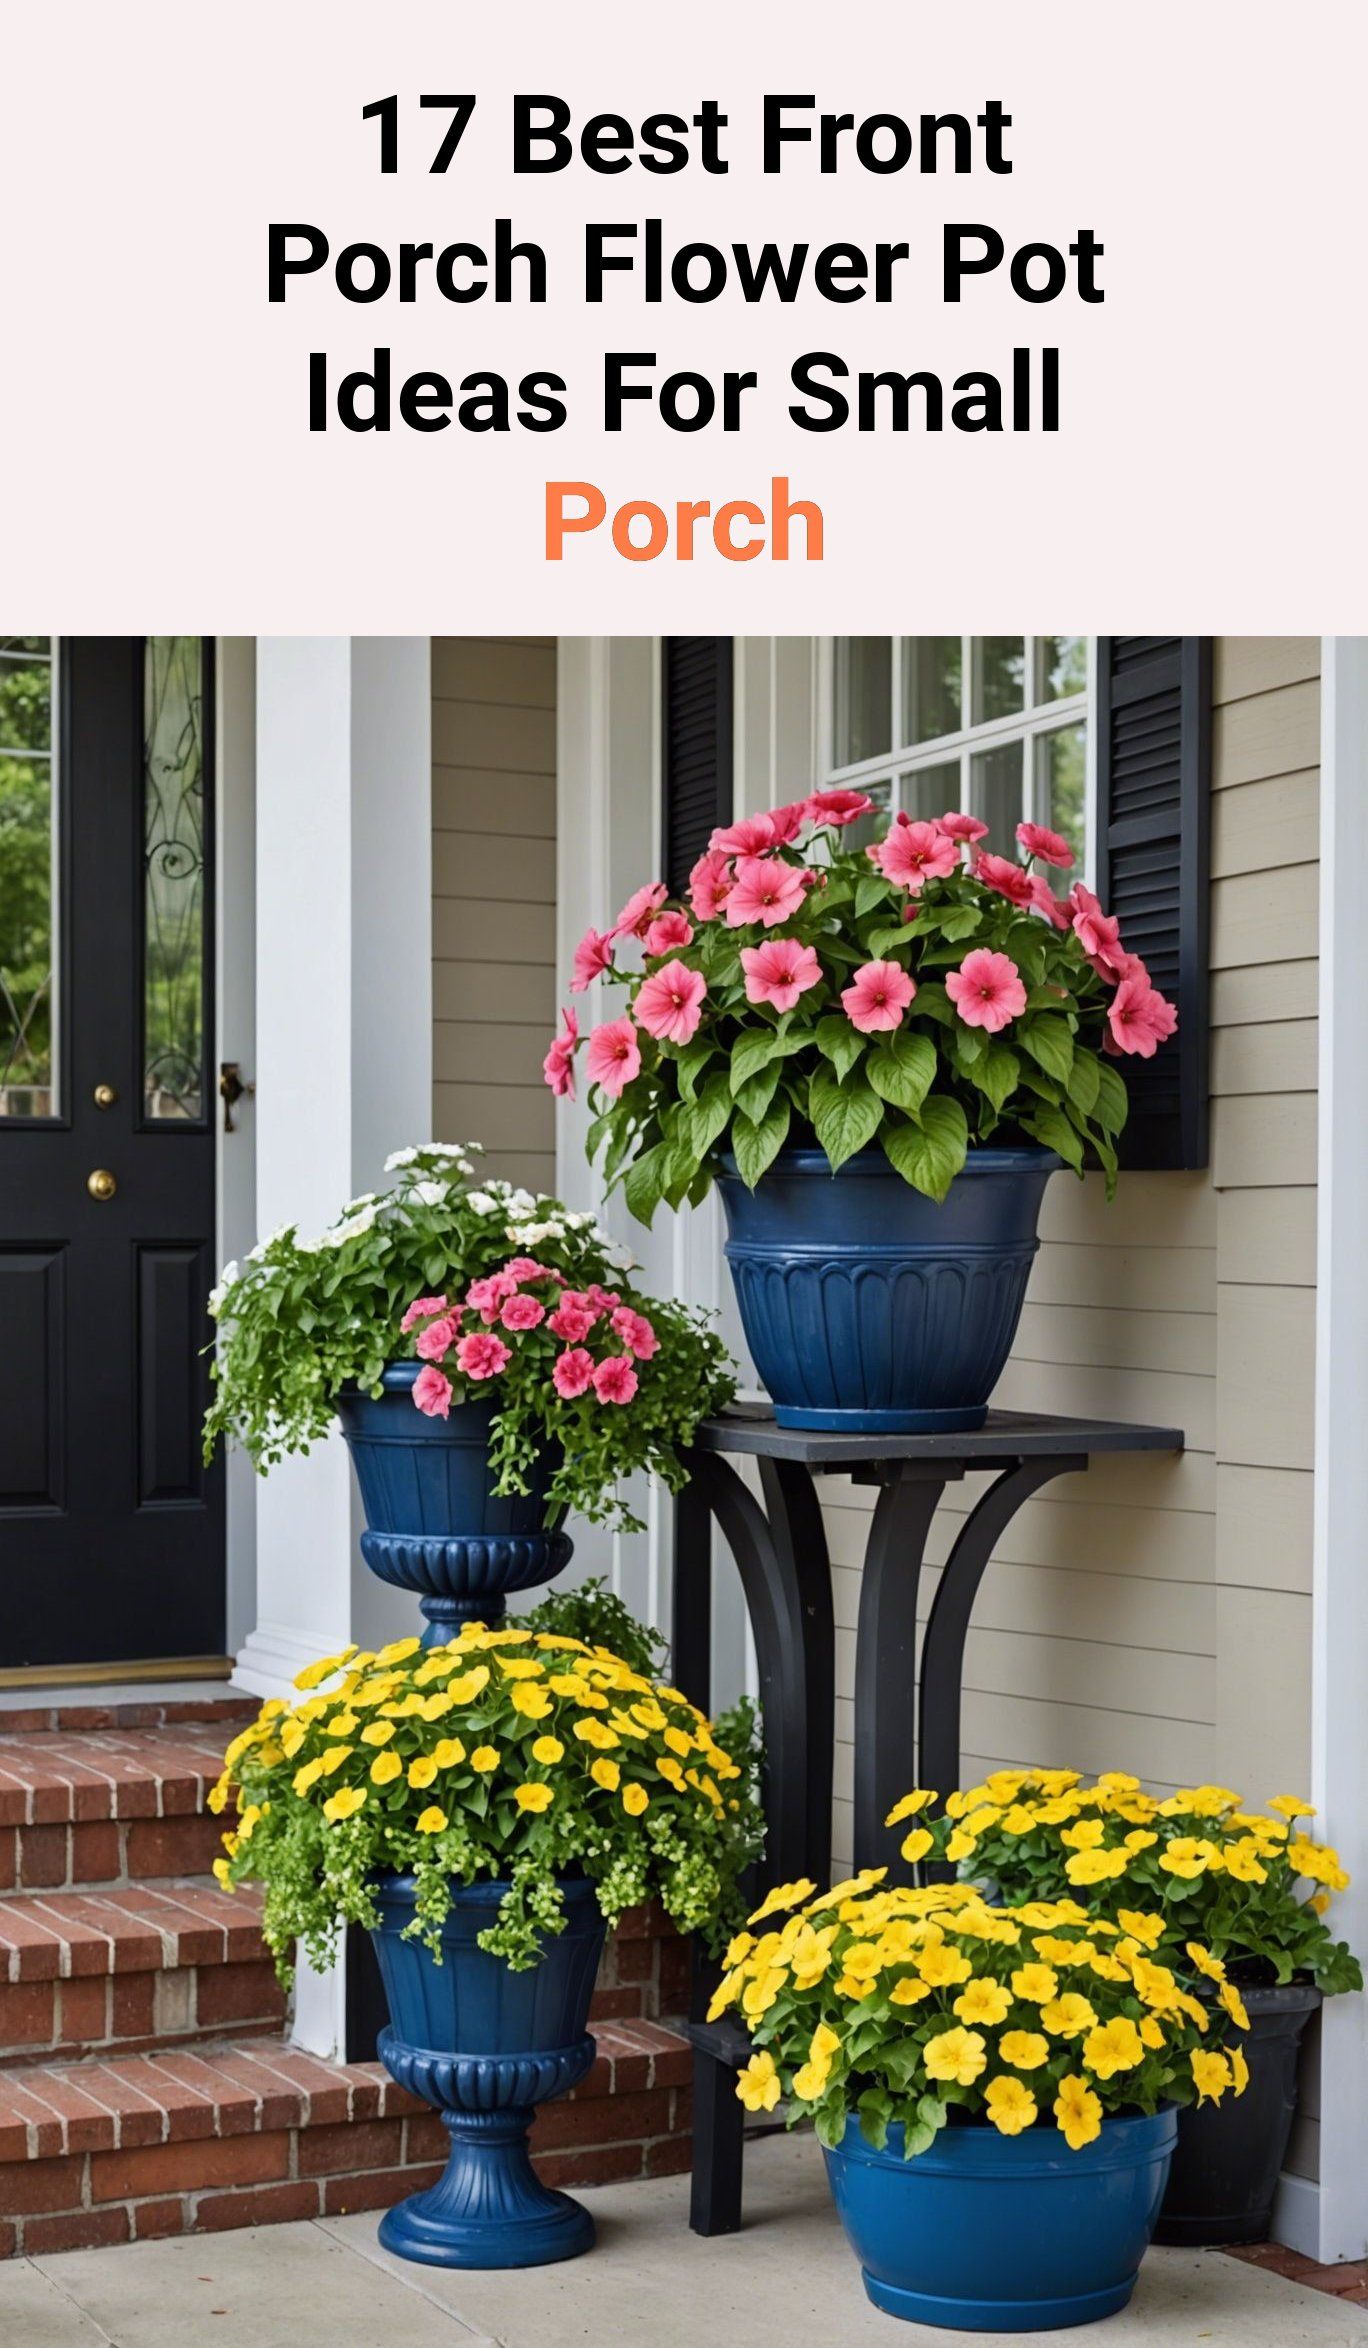 17 Best Front Porch Flower Pot Ideas For Small Porch